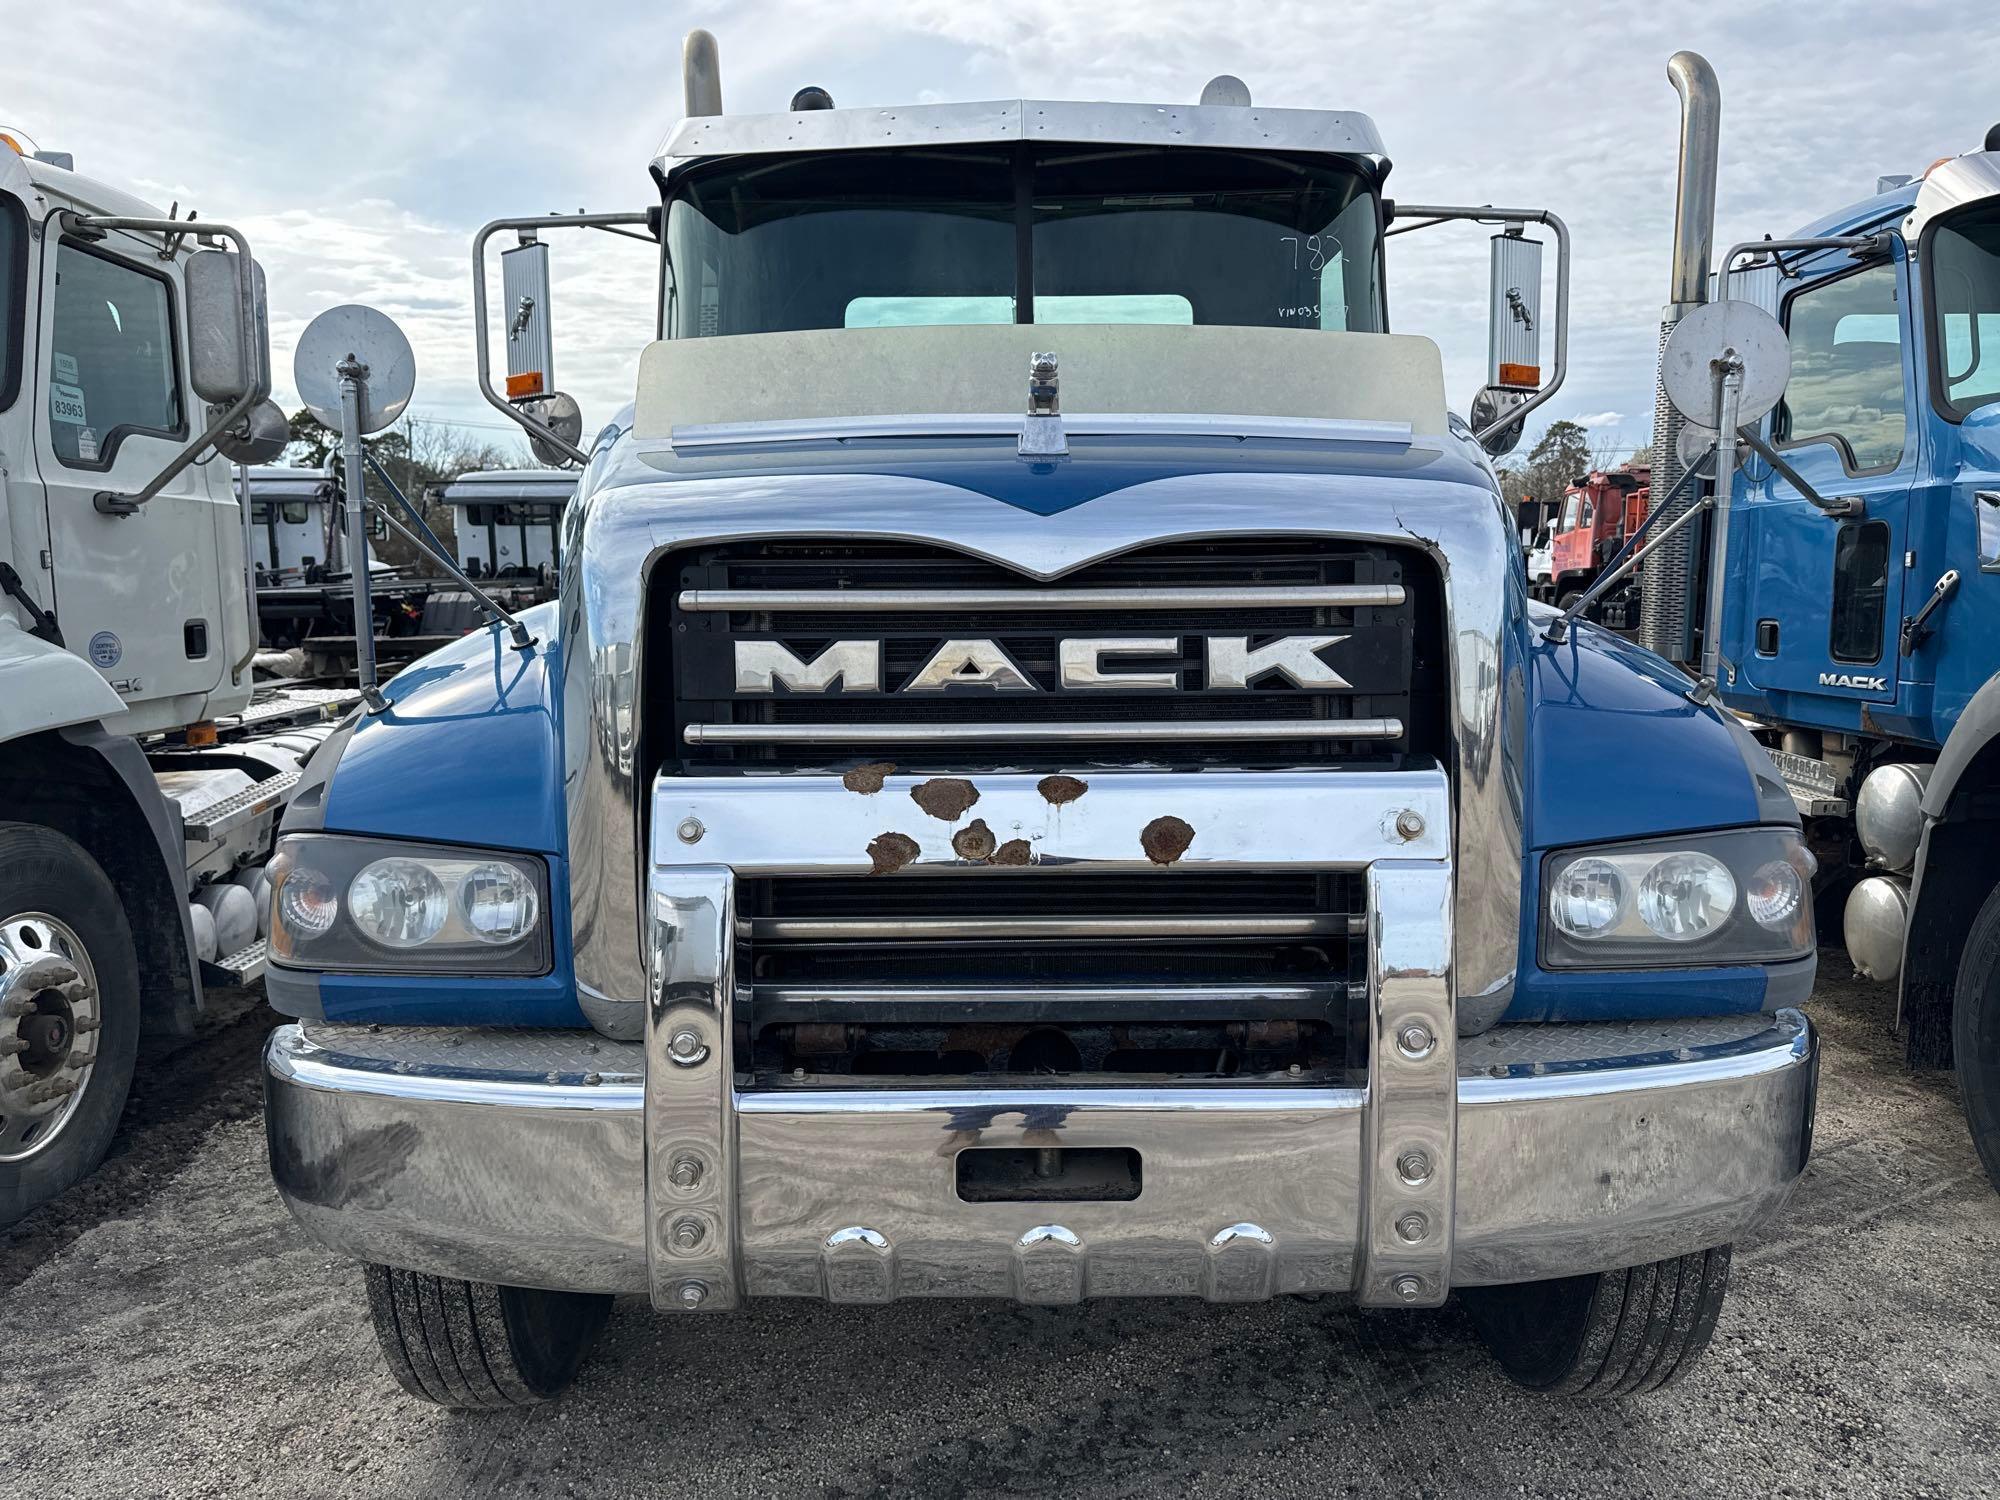 2017 MACK GU713 TRUCK TRACTOR VN:1M1AX07YXHM035337 powered by Mack MP8 diesel engine, 500hp,